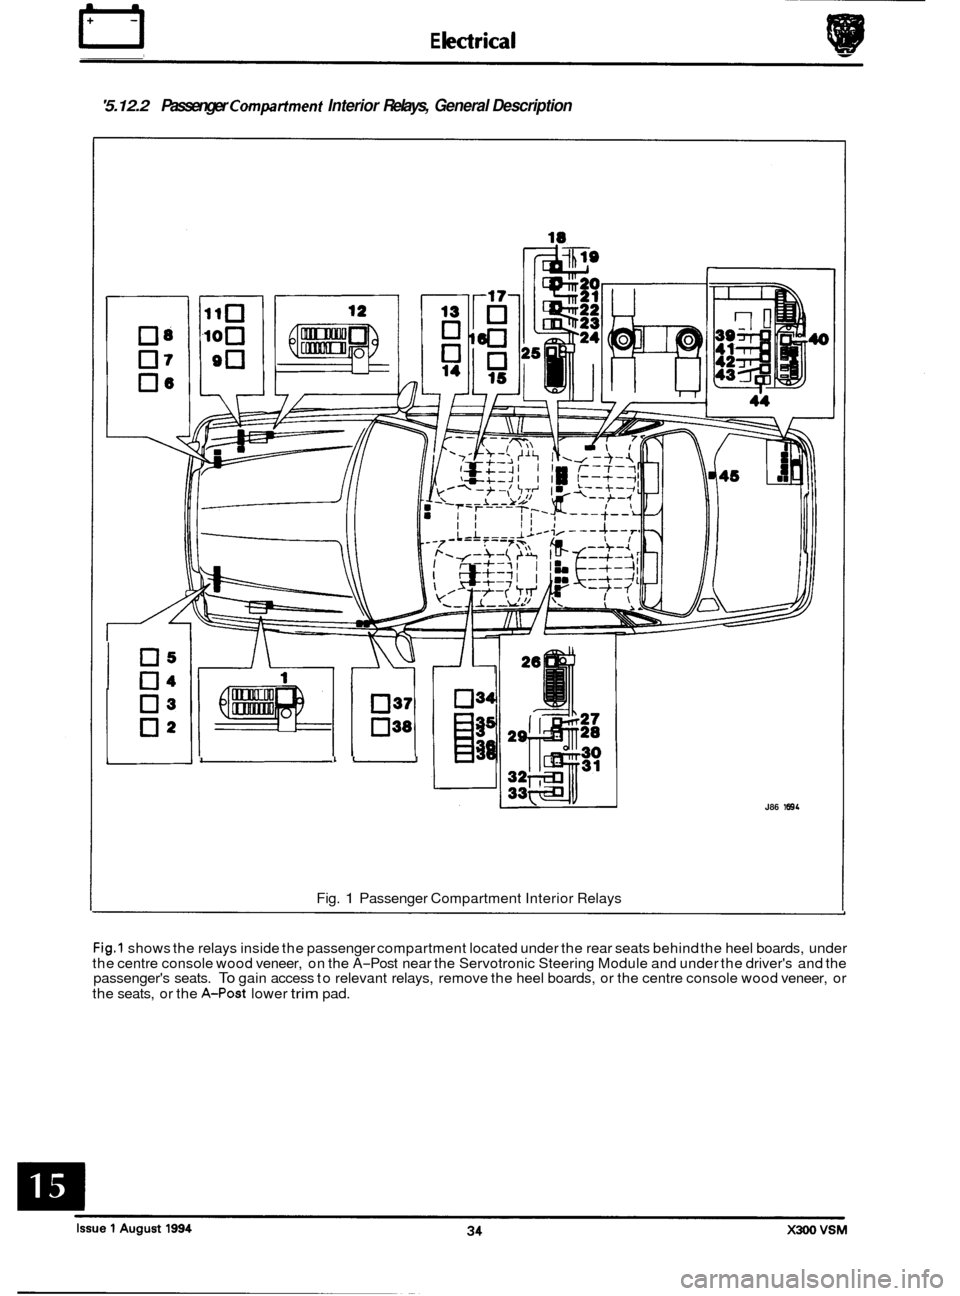 JAGUAR XJ6 1994 2.G Workshop Manual I3 E I ectr ical 
5.12.2 Passenger Compatiment Interior Relays, General Description 
I 0": 
03 
02 
I 1- 
03 
036 0.i 
Fig. 1 Passenger  Compartment  Interior Relays 
J86 1894 
0 
0 
0 
Fig.1 shows t